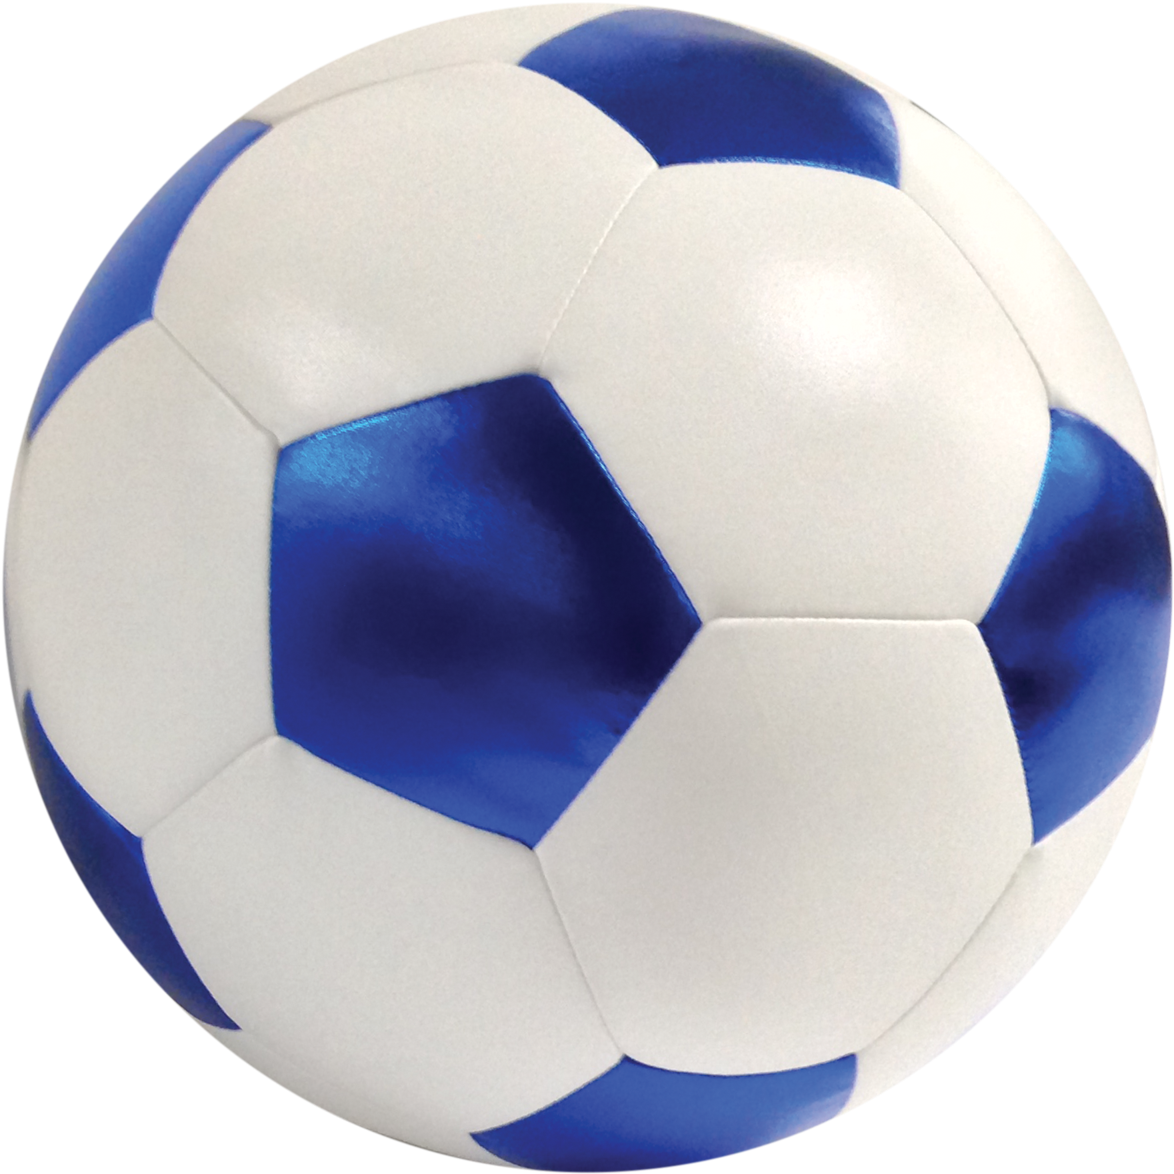 Football Pillow Sport Throw-in - Iscream Soccer Ball 3d Microbead Throw Pillow, Blue (1200x1200)